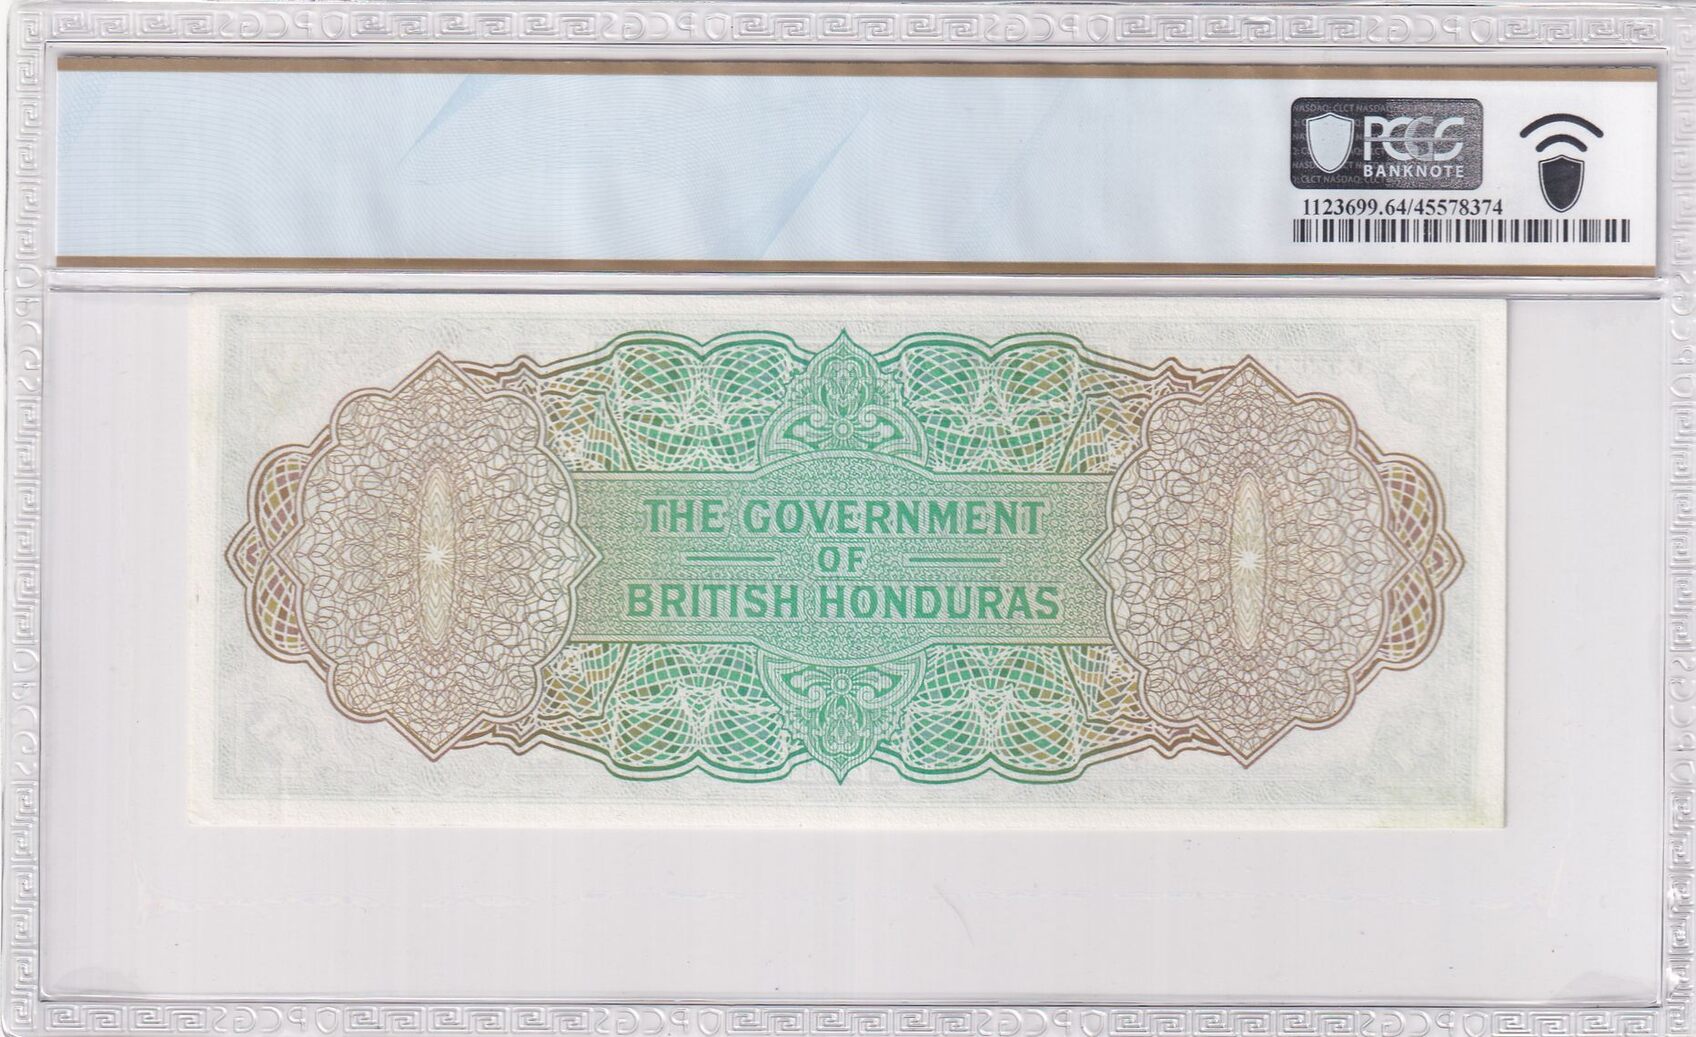 British Honduras 1 Dollar 1973 Highest graded by PCGS PCGS Choice UNC 64  PPQ | MA-Shops